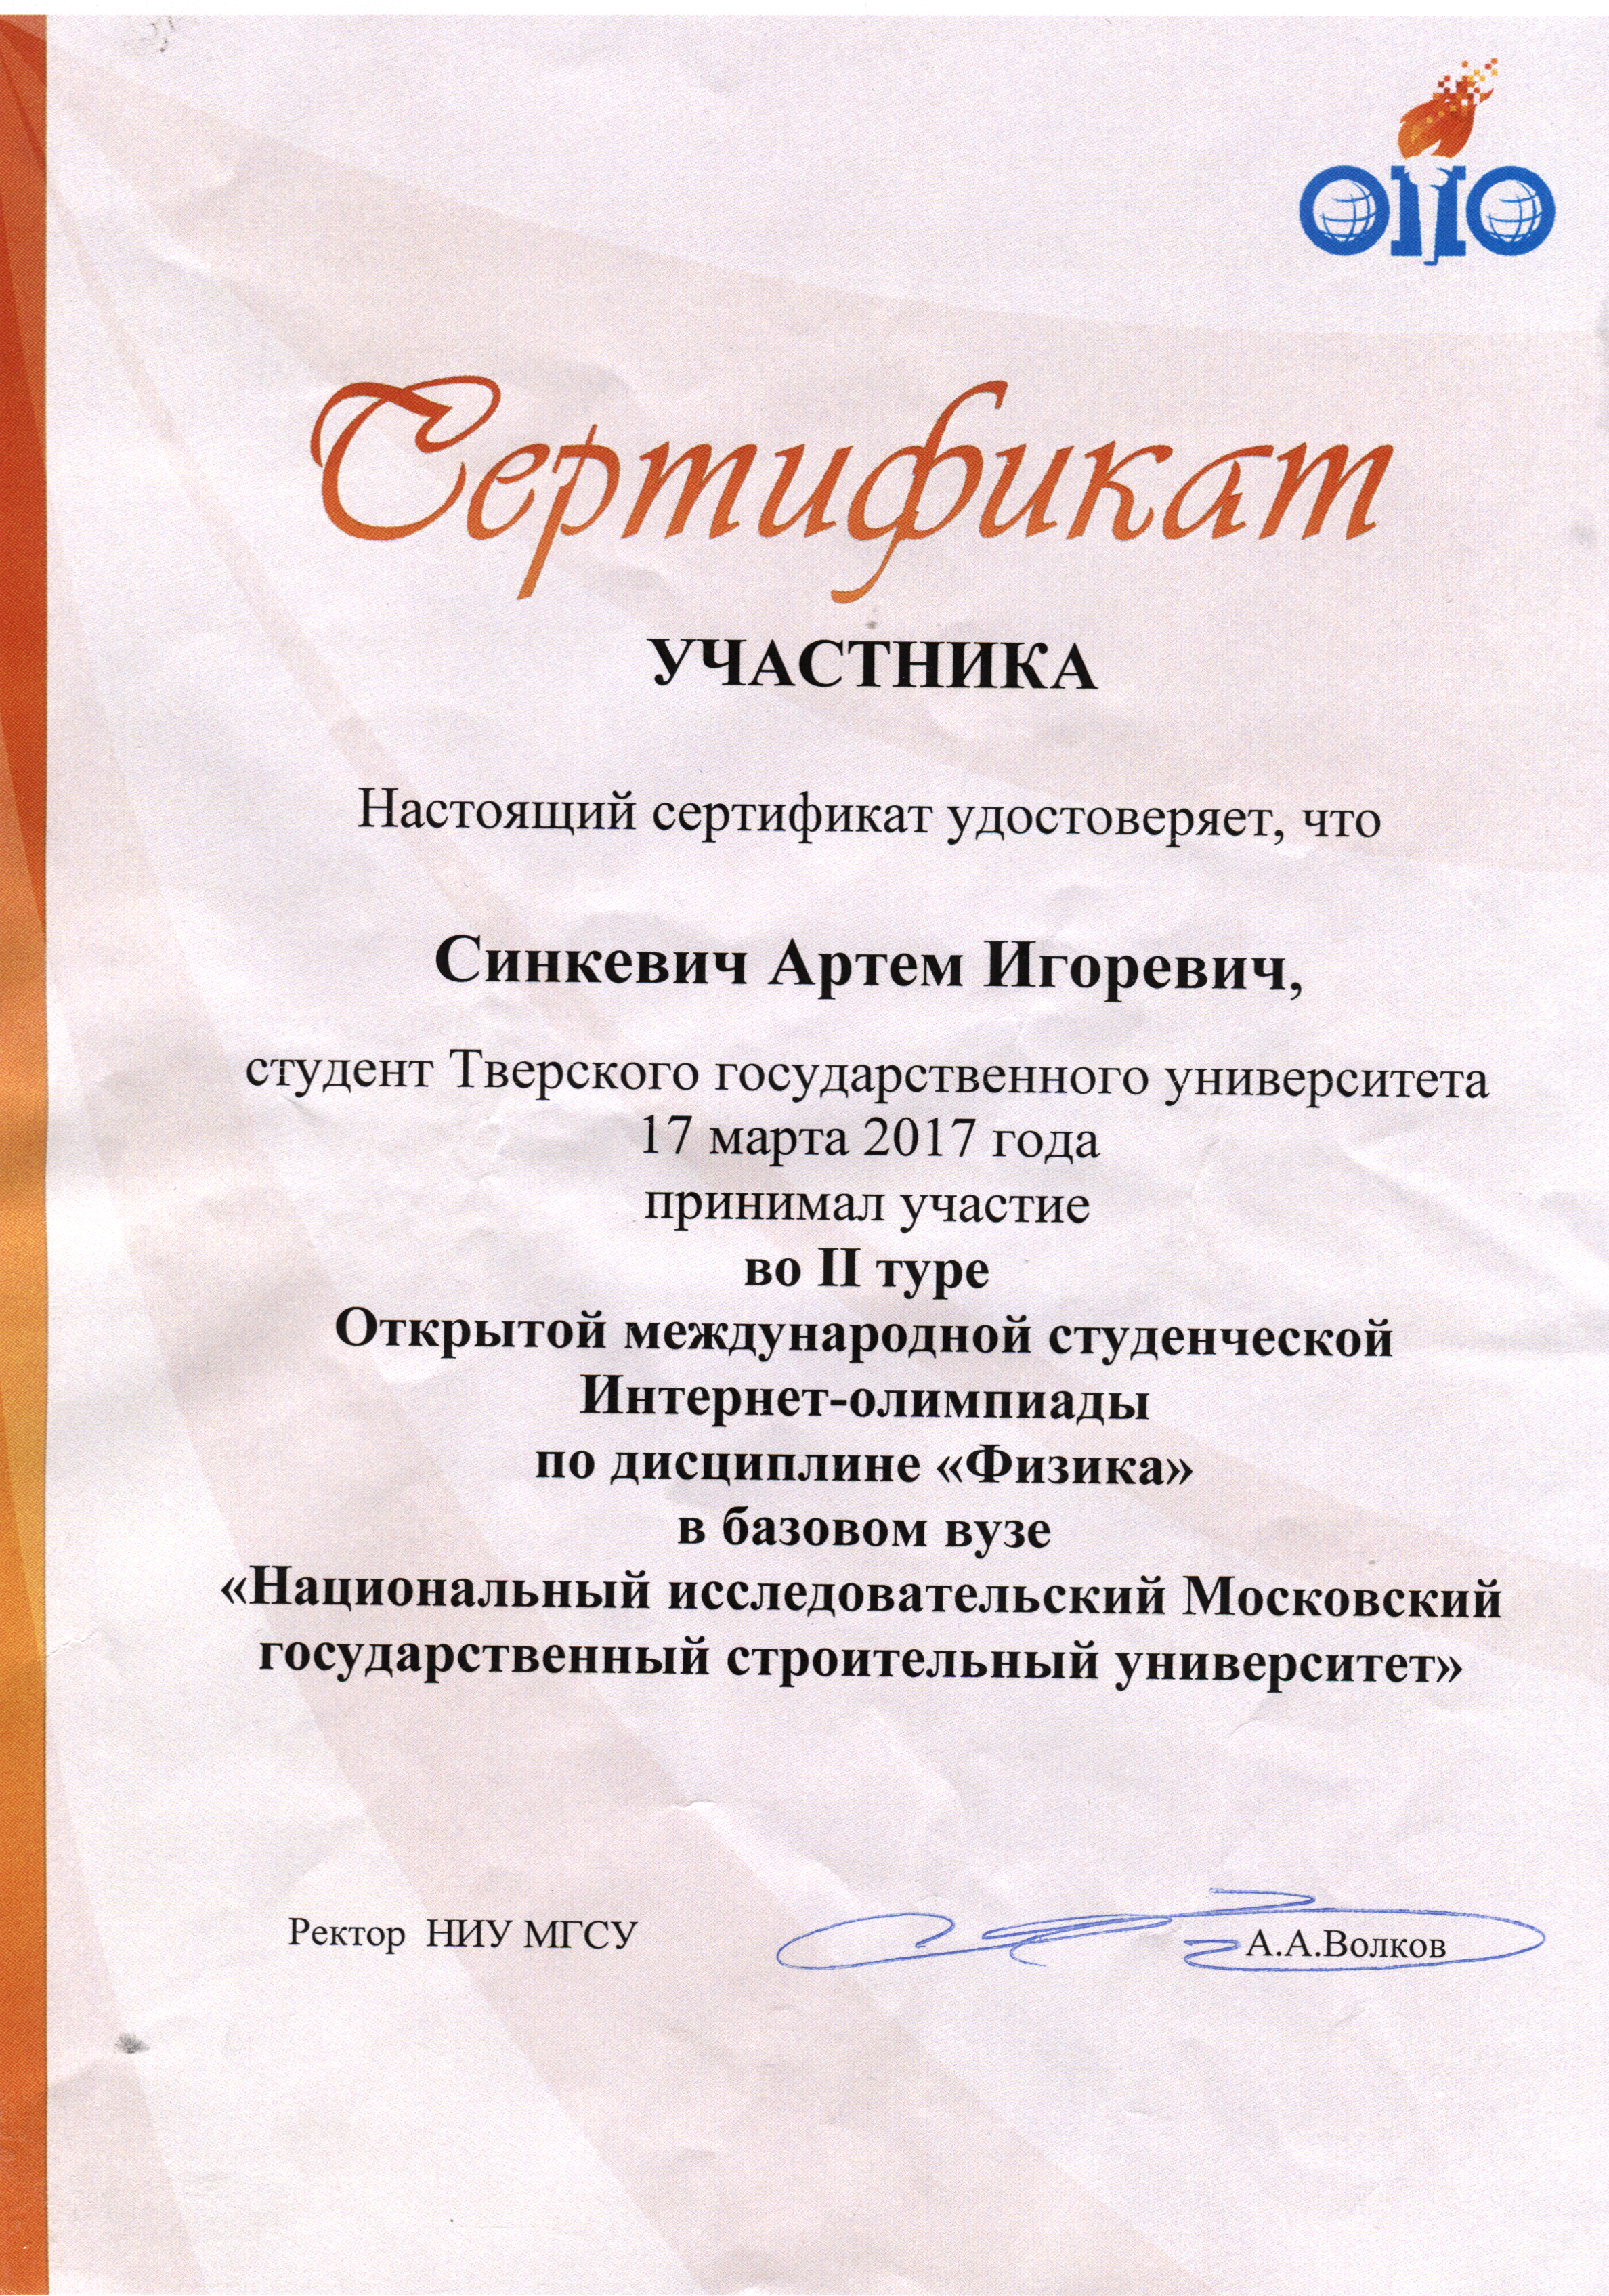 Сертификат4.jpg